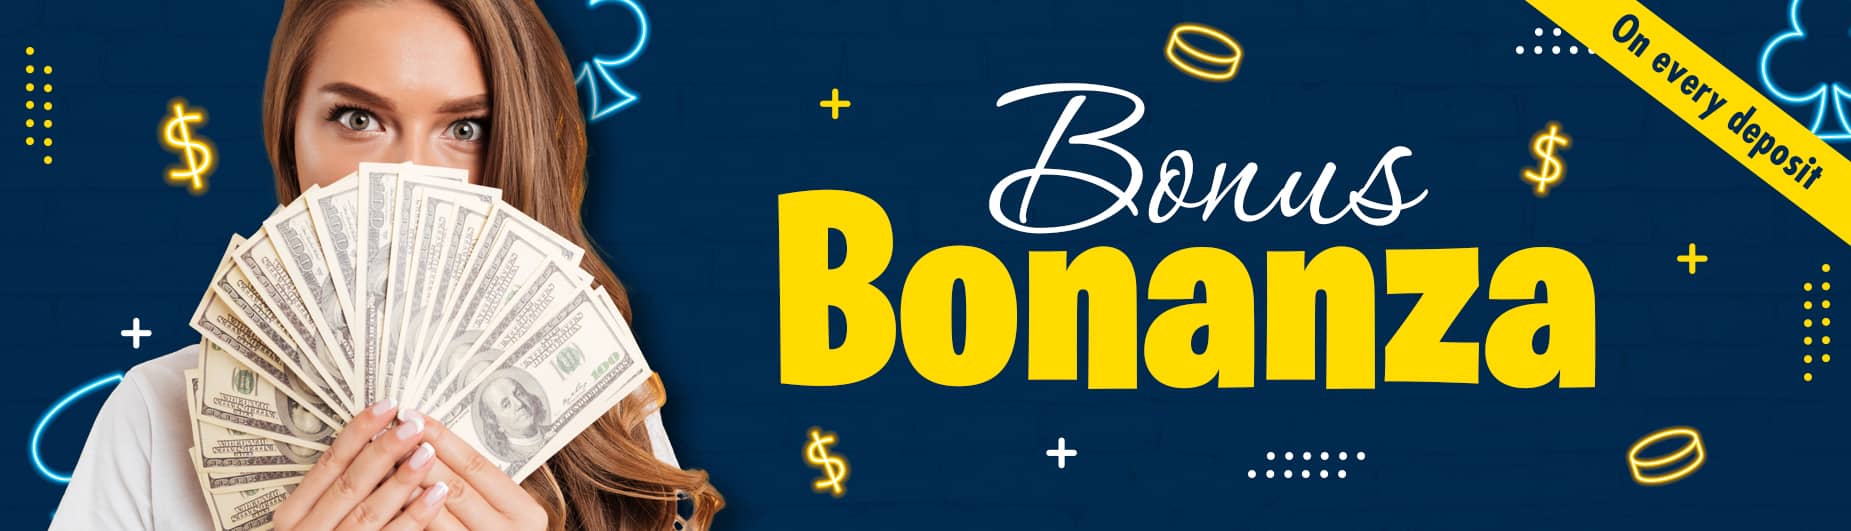 Up to 250% best online casino bonus